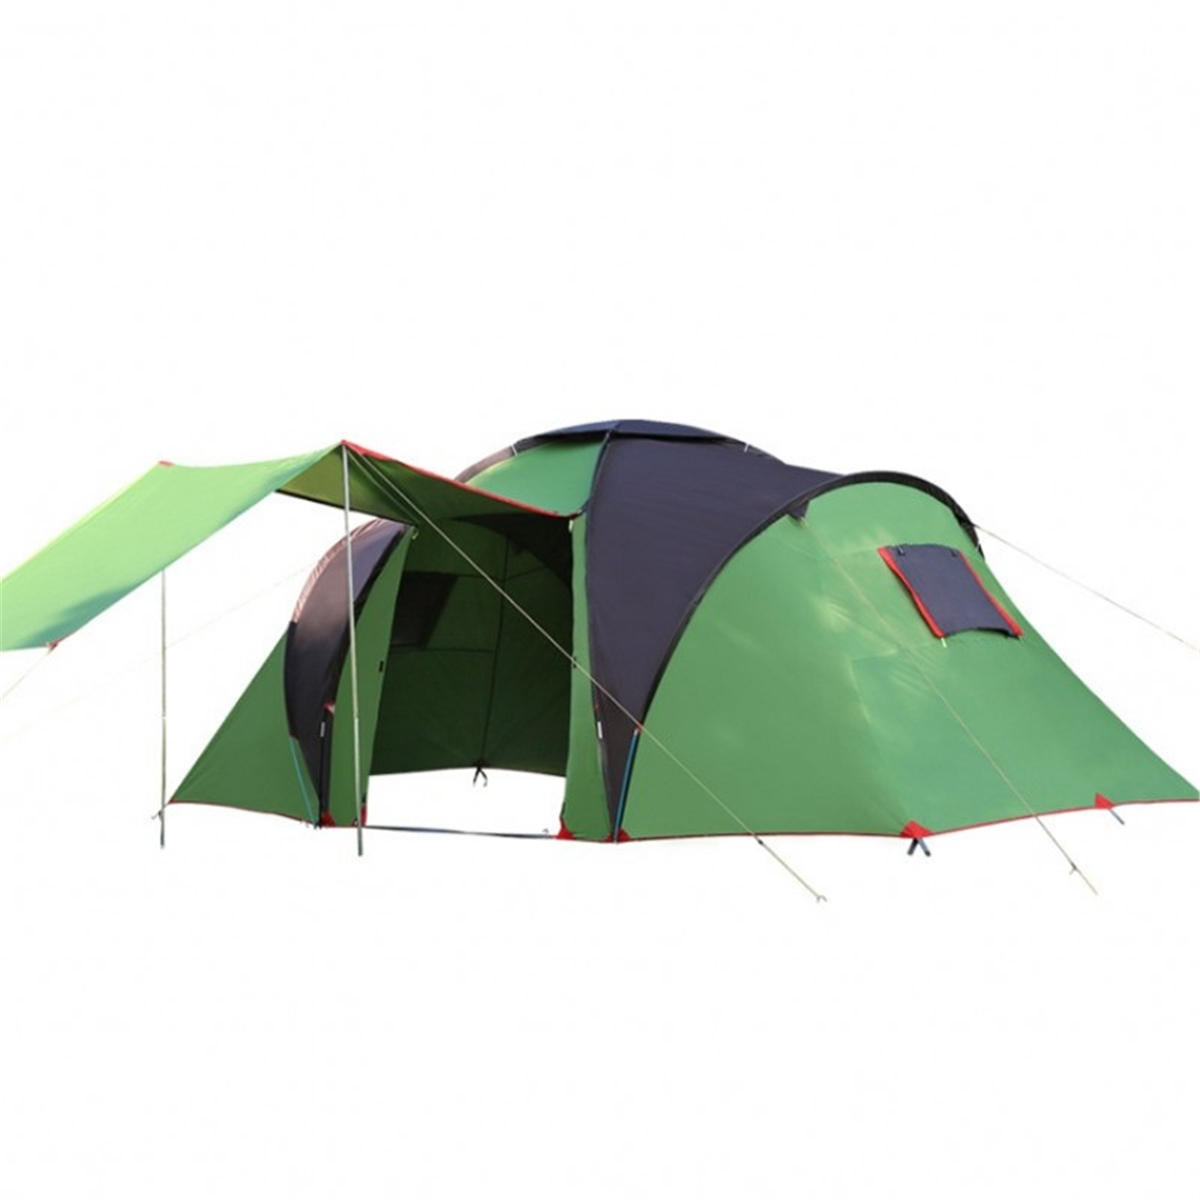 4-6 Personen Familie Dome Zelt wasserdicht Doppelschicht große Baldachin Sonnenschirm Outdoor Camping